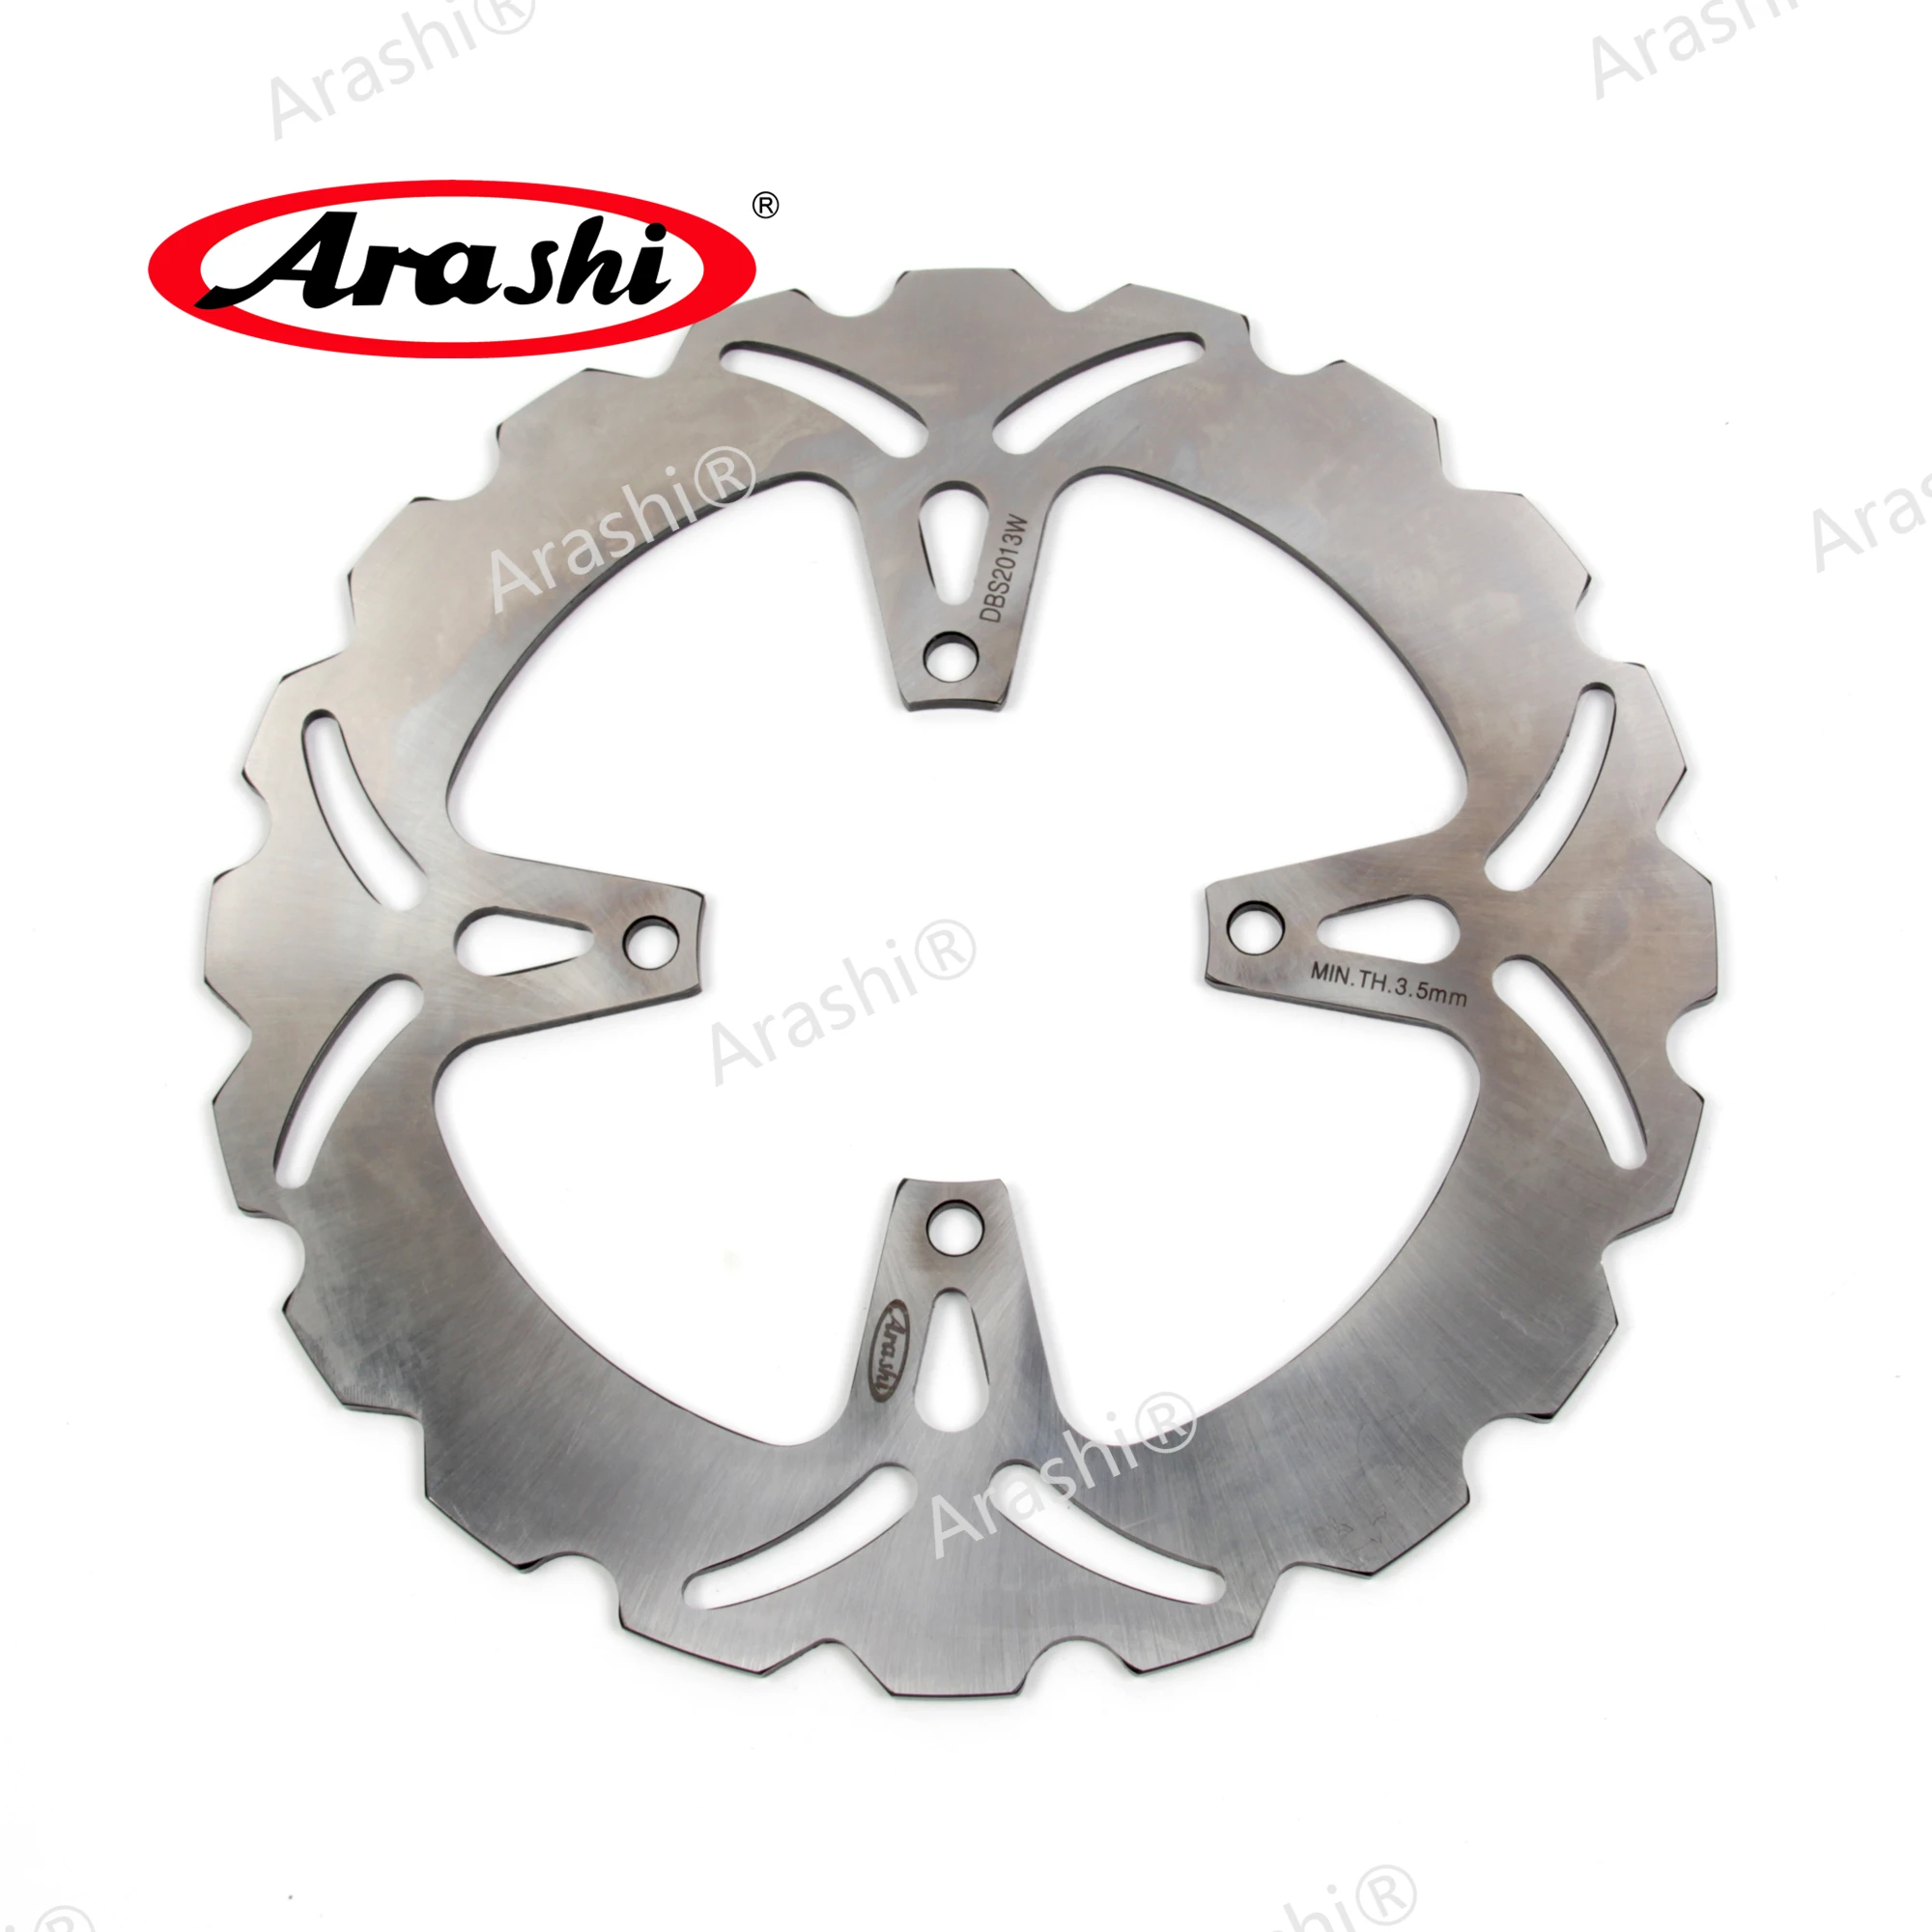 

ARASHI GSF400 BANDIT Rear Brake Disc CNC Disk Rotor For SUZUKI GSF 400 1989 - 1996 1990 1991 1992 1993 1994 1995 Stainless Steel